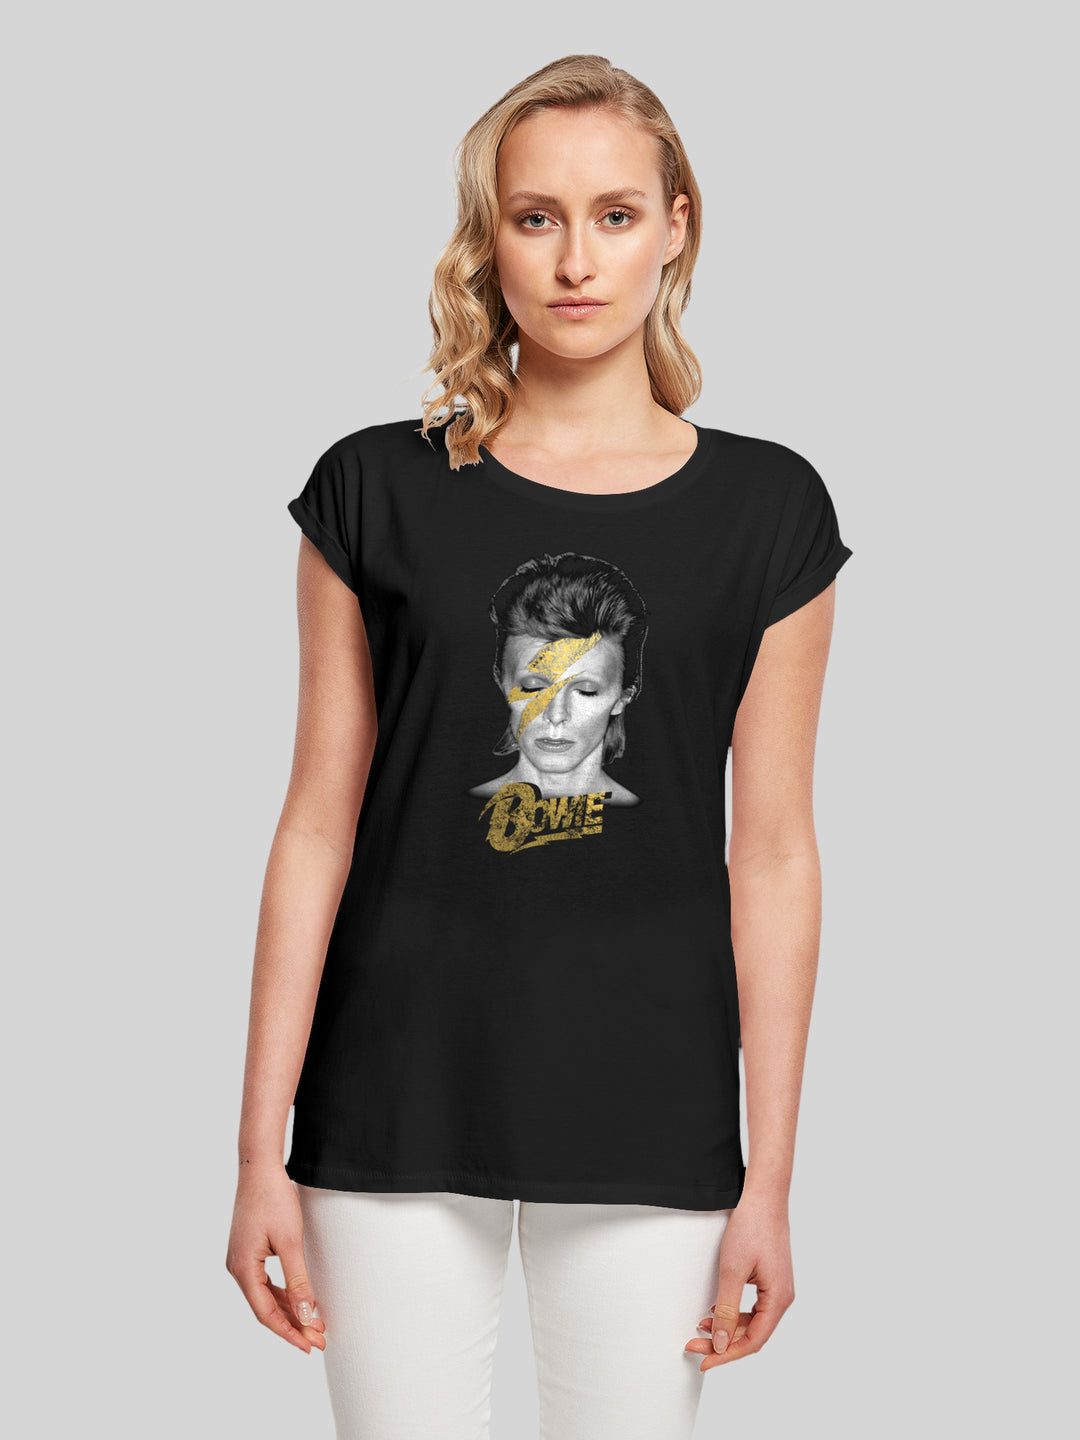 David Bowie T-Shirt | Aladdin Sane Gold Bolt | Premium Short Sleeve Ladies Tee